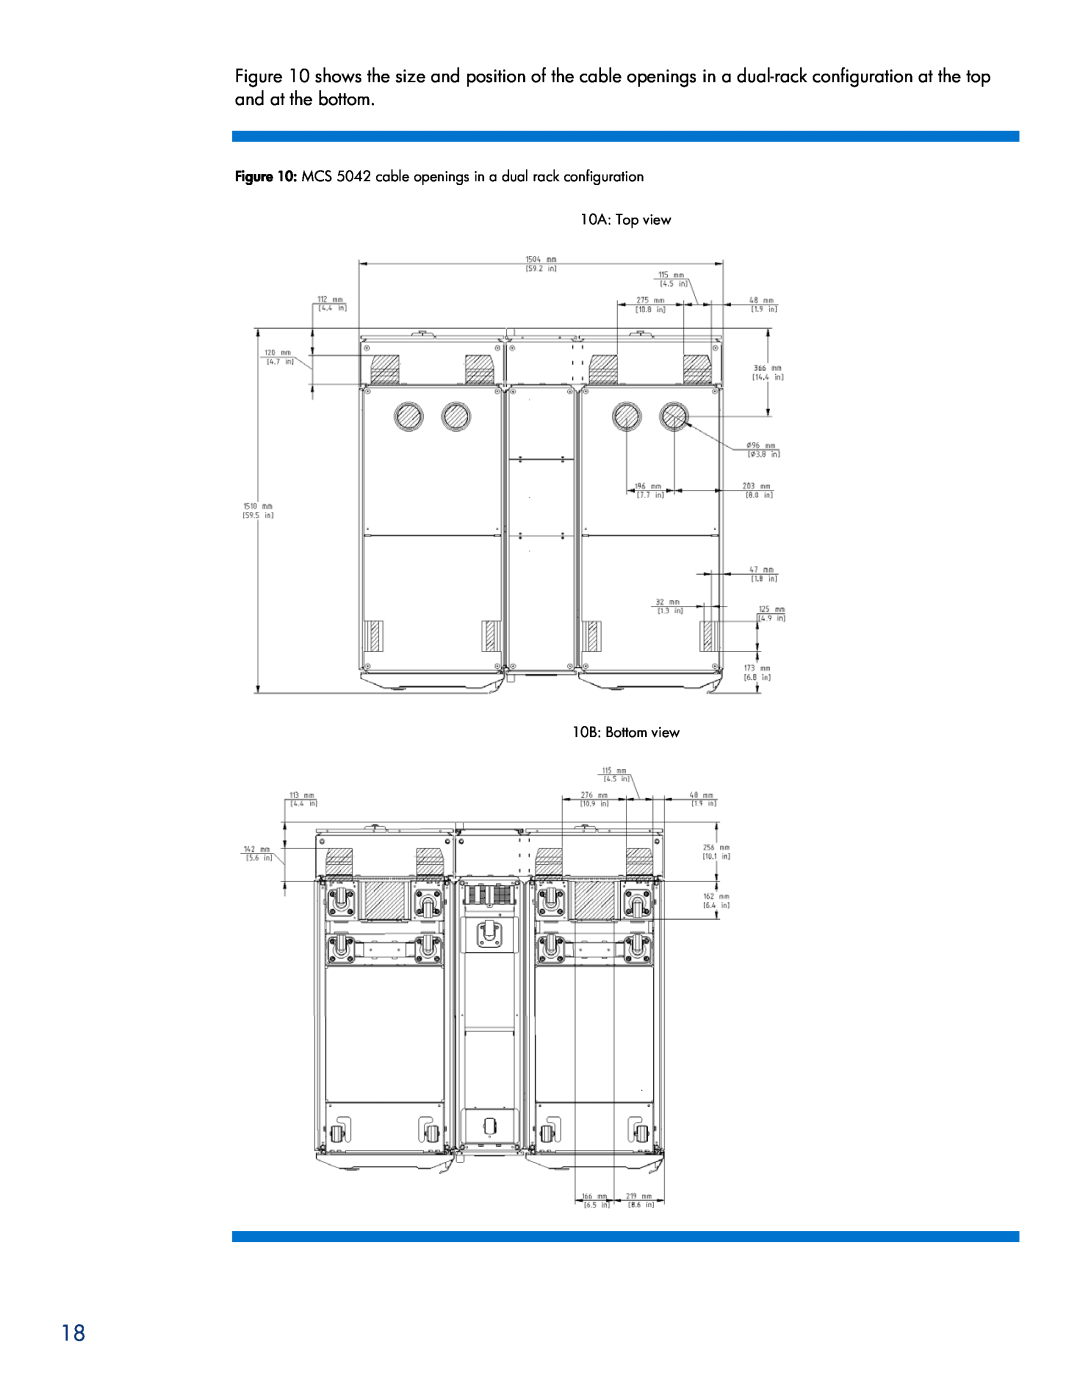 HP Modular Cooling System manual 10B Bottom view 